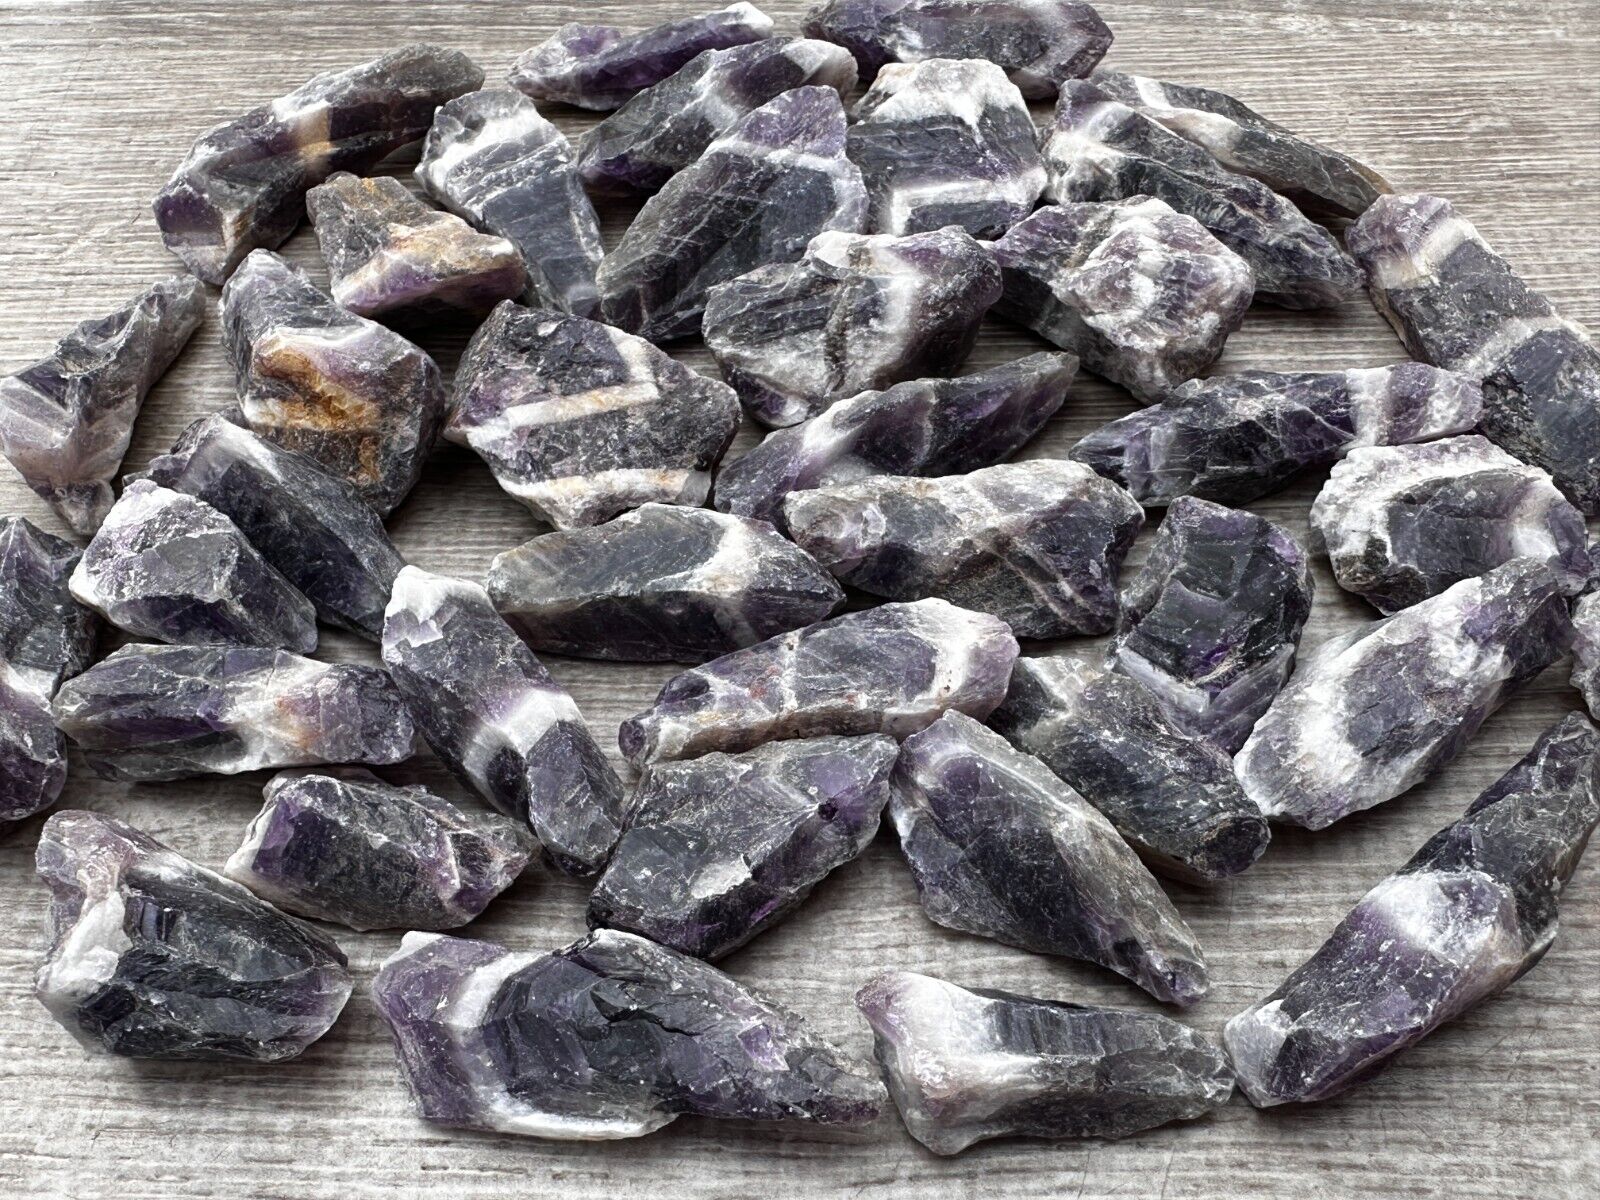 Chevron Amethyst Rough Stones, 1-2